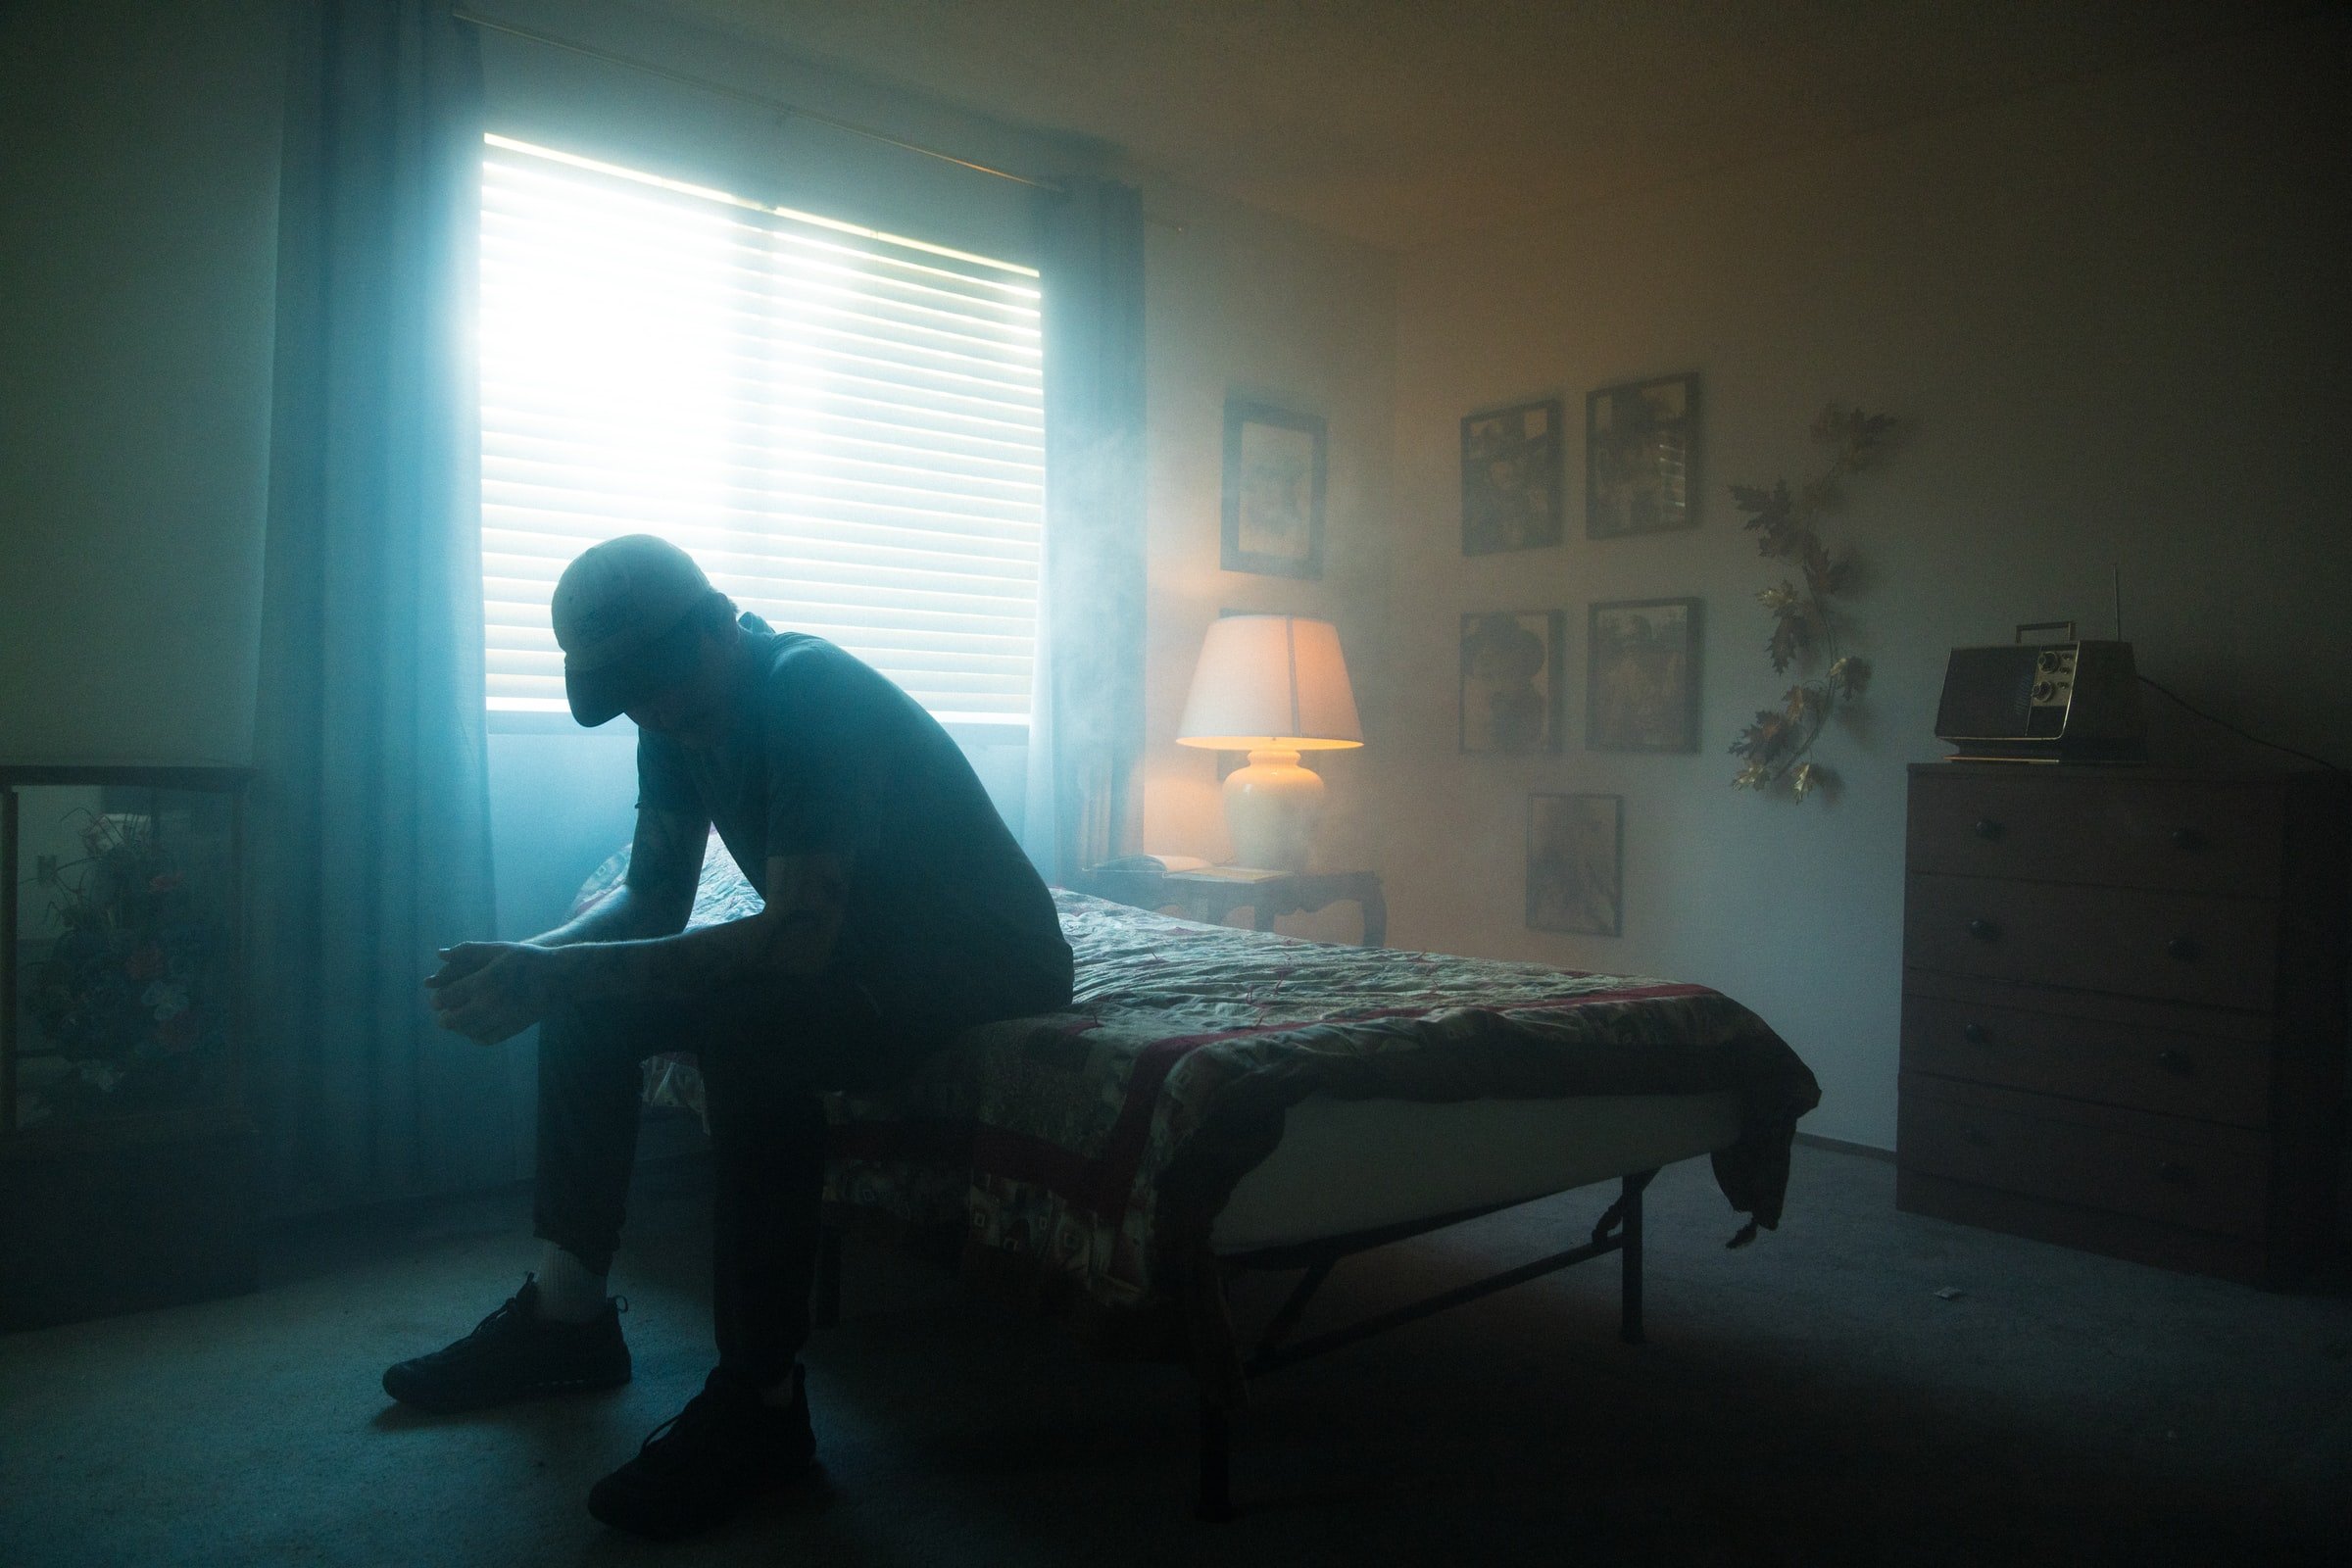 A man sitting on a bed in a dark room. | Source: Unsplash